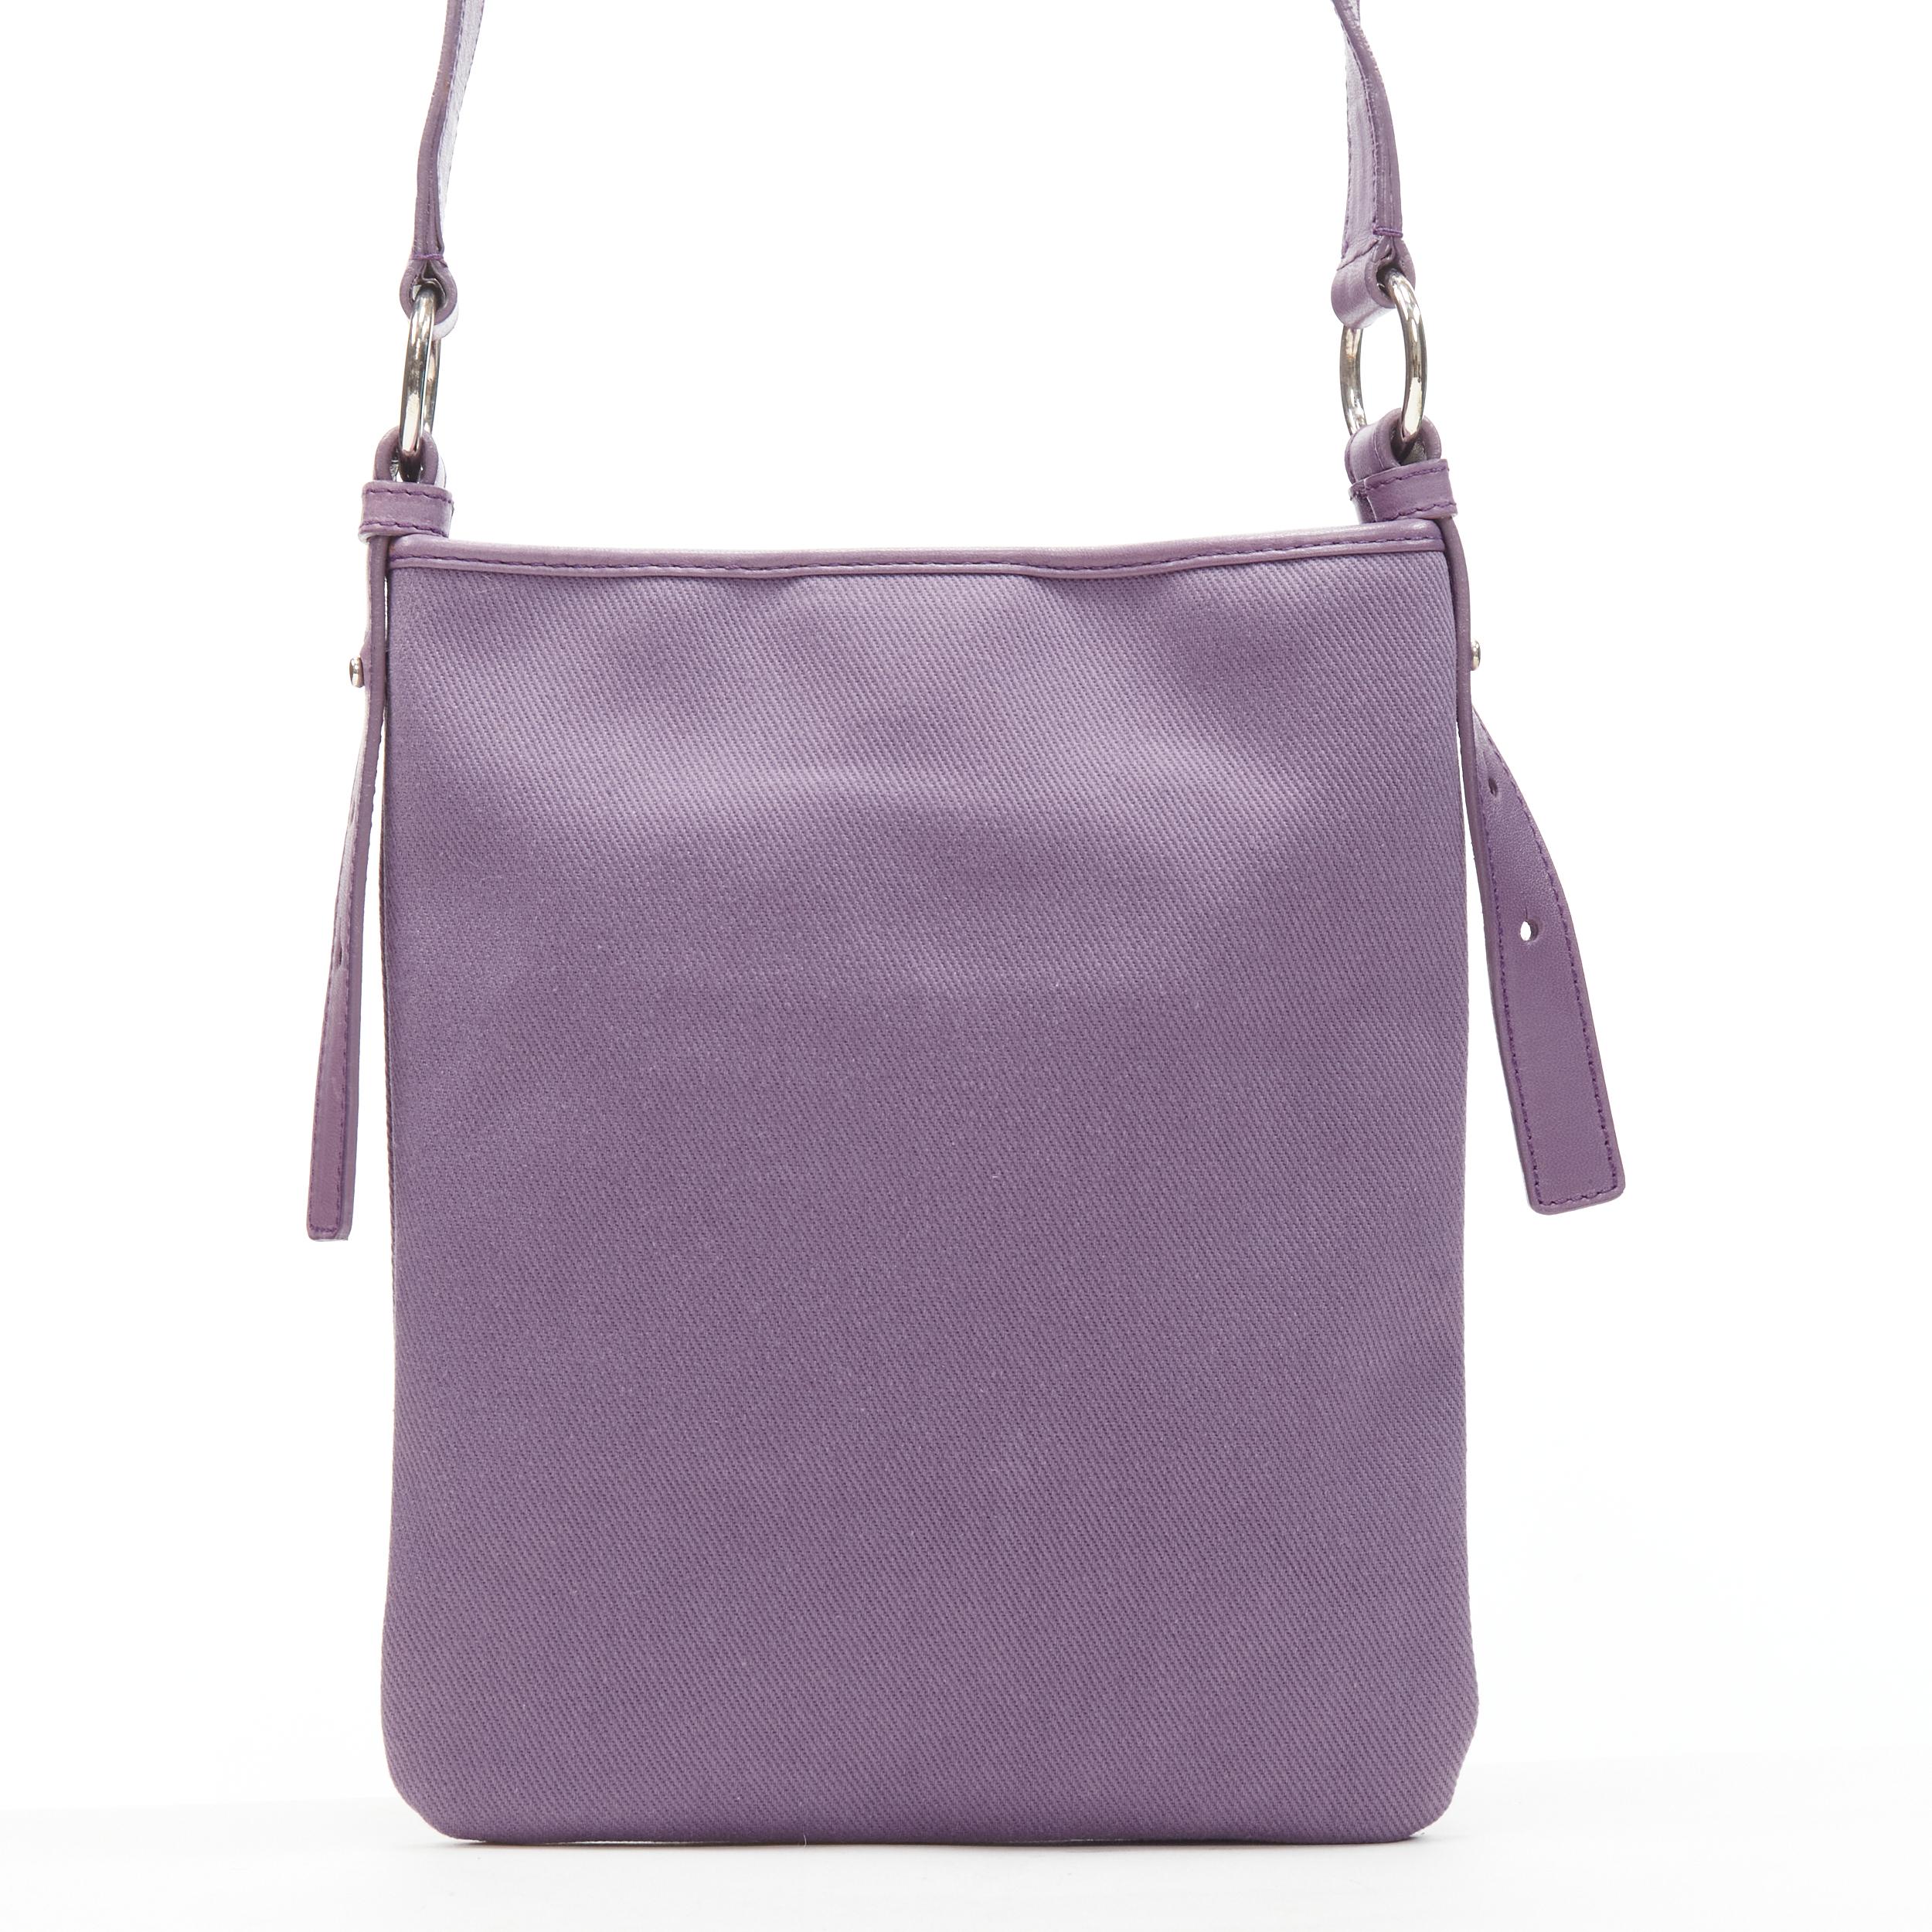 ysl purple bag